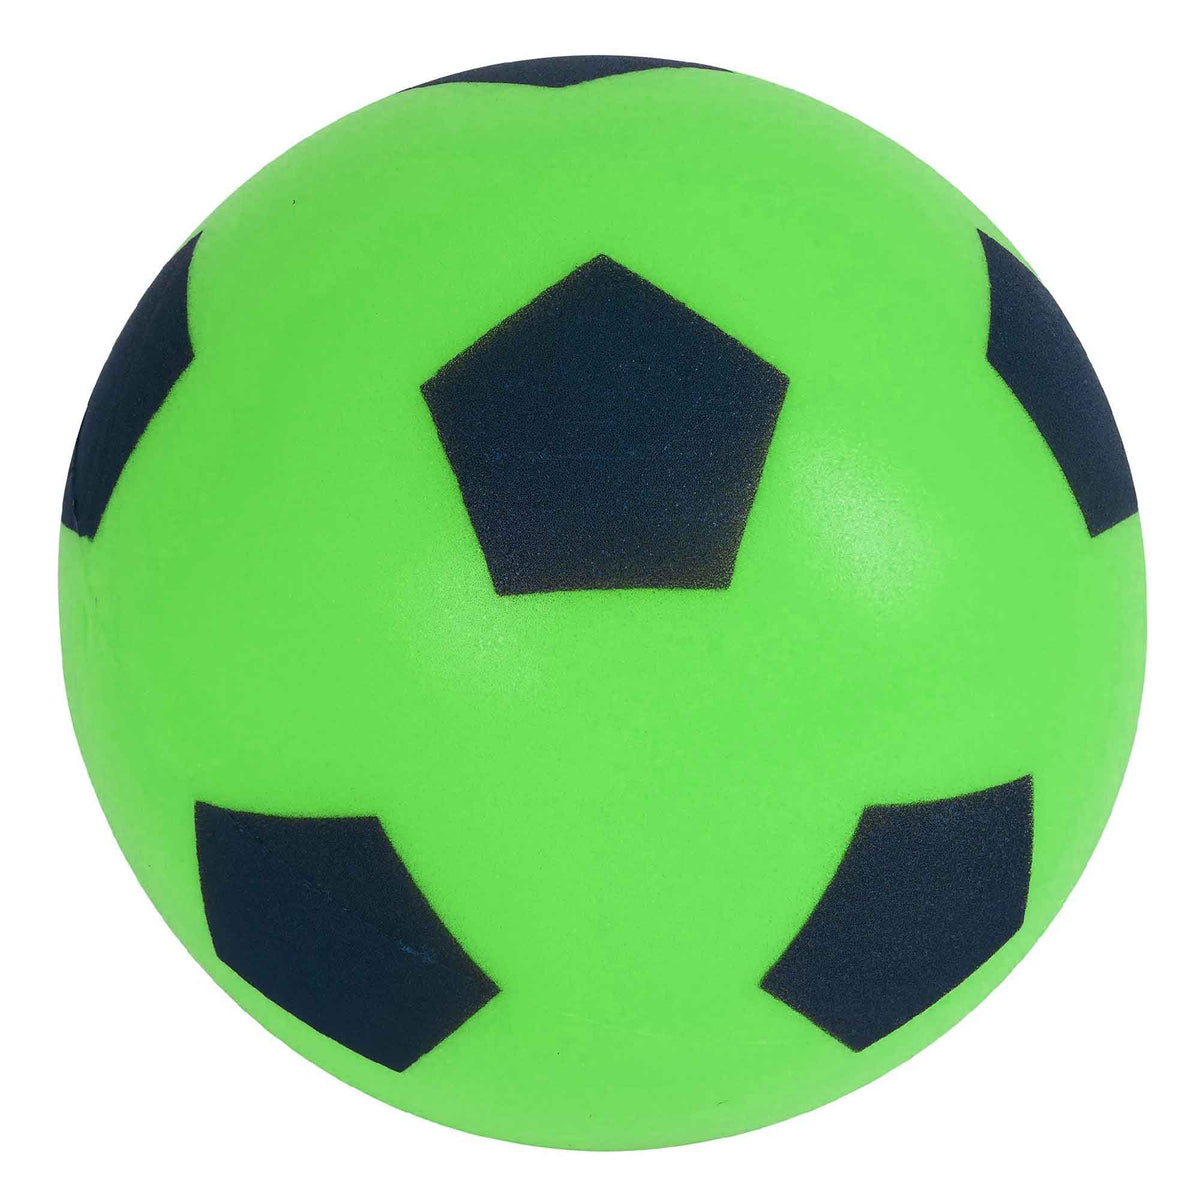 Copy of Soft Foam/Sponge Footballs/Soccer Balls - Green